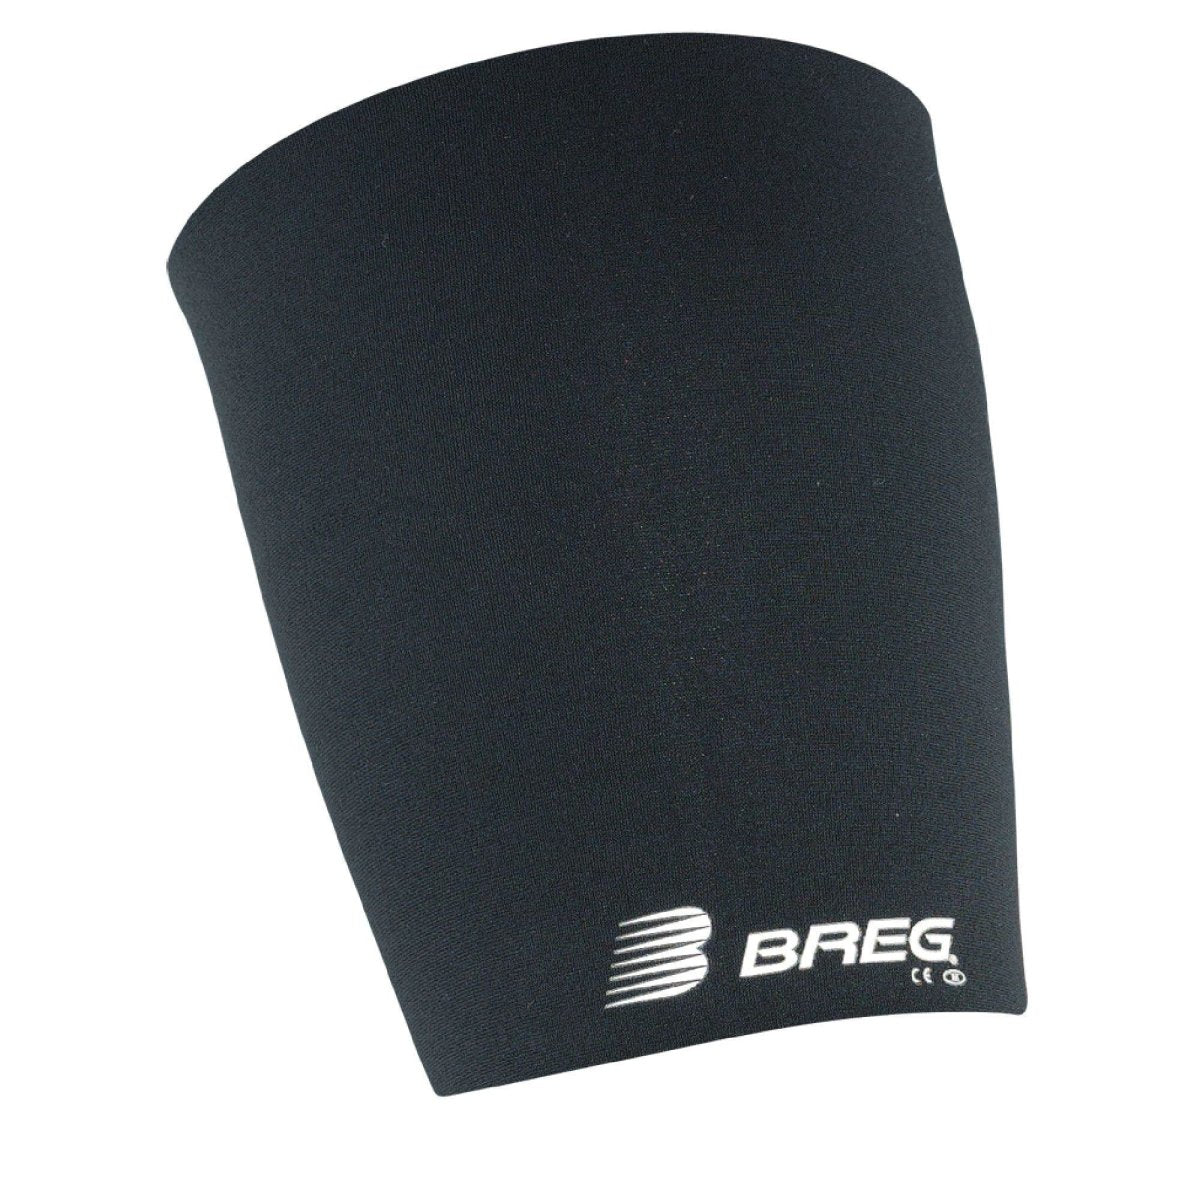 Breg Thigh Support - 11141-XS - Brace Direct